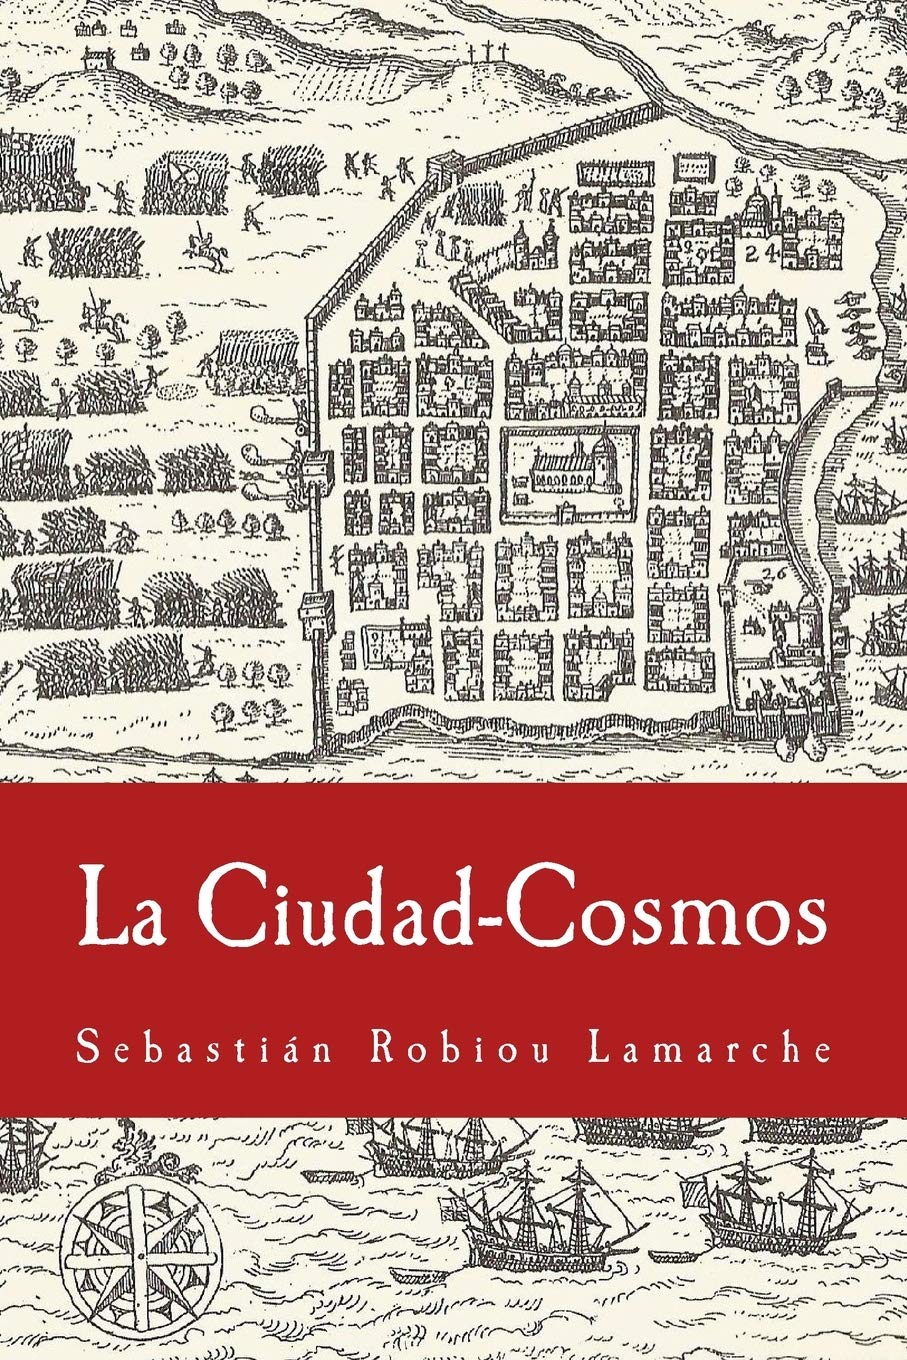 LA CIUDAD-COSMOS: SANTO DOMINGO / SAN JUAN SIGLOS XVI-XVII - Sebastián Robiou Lamarche